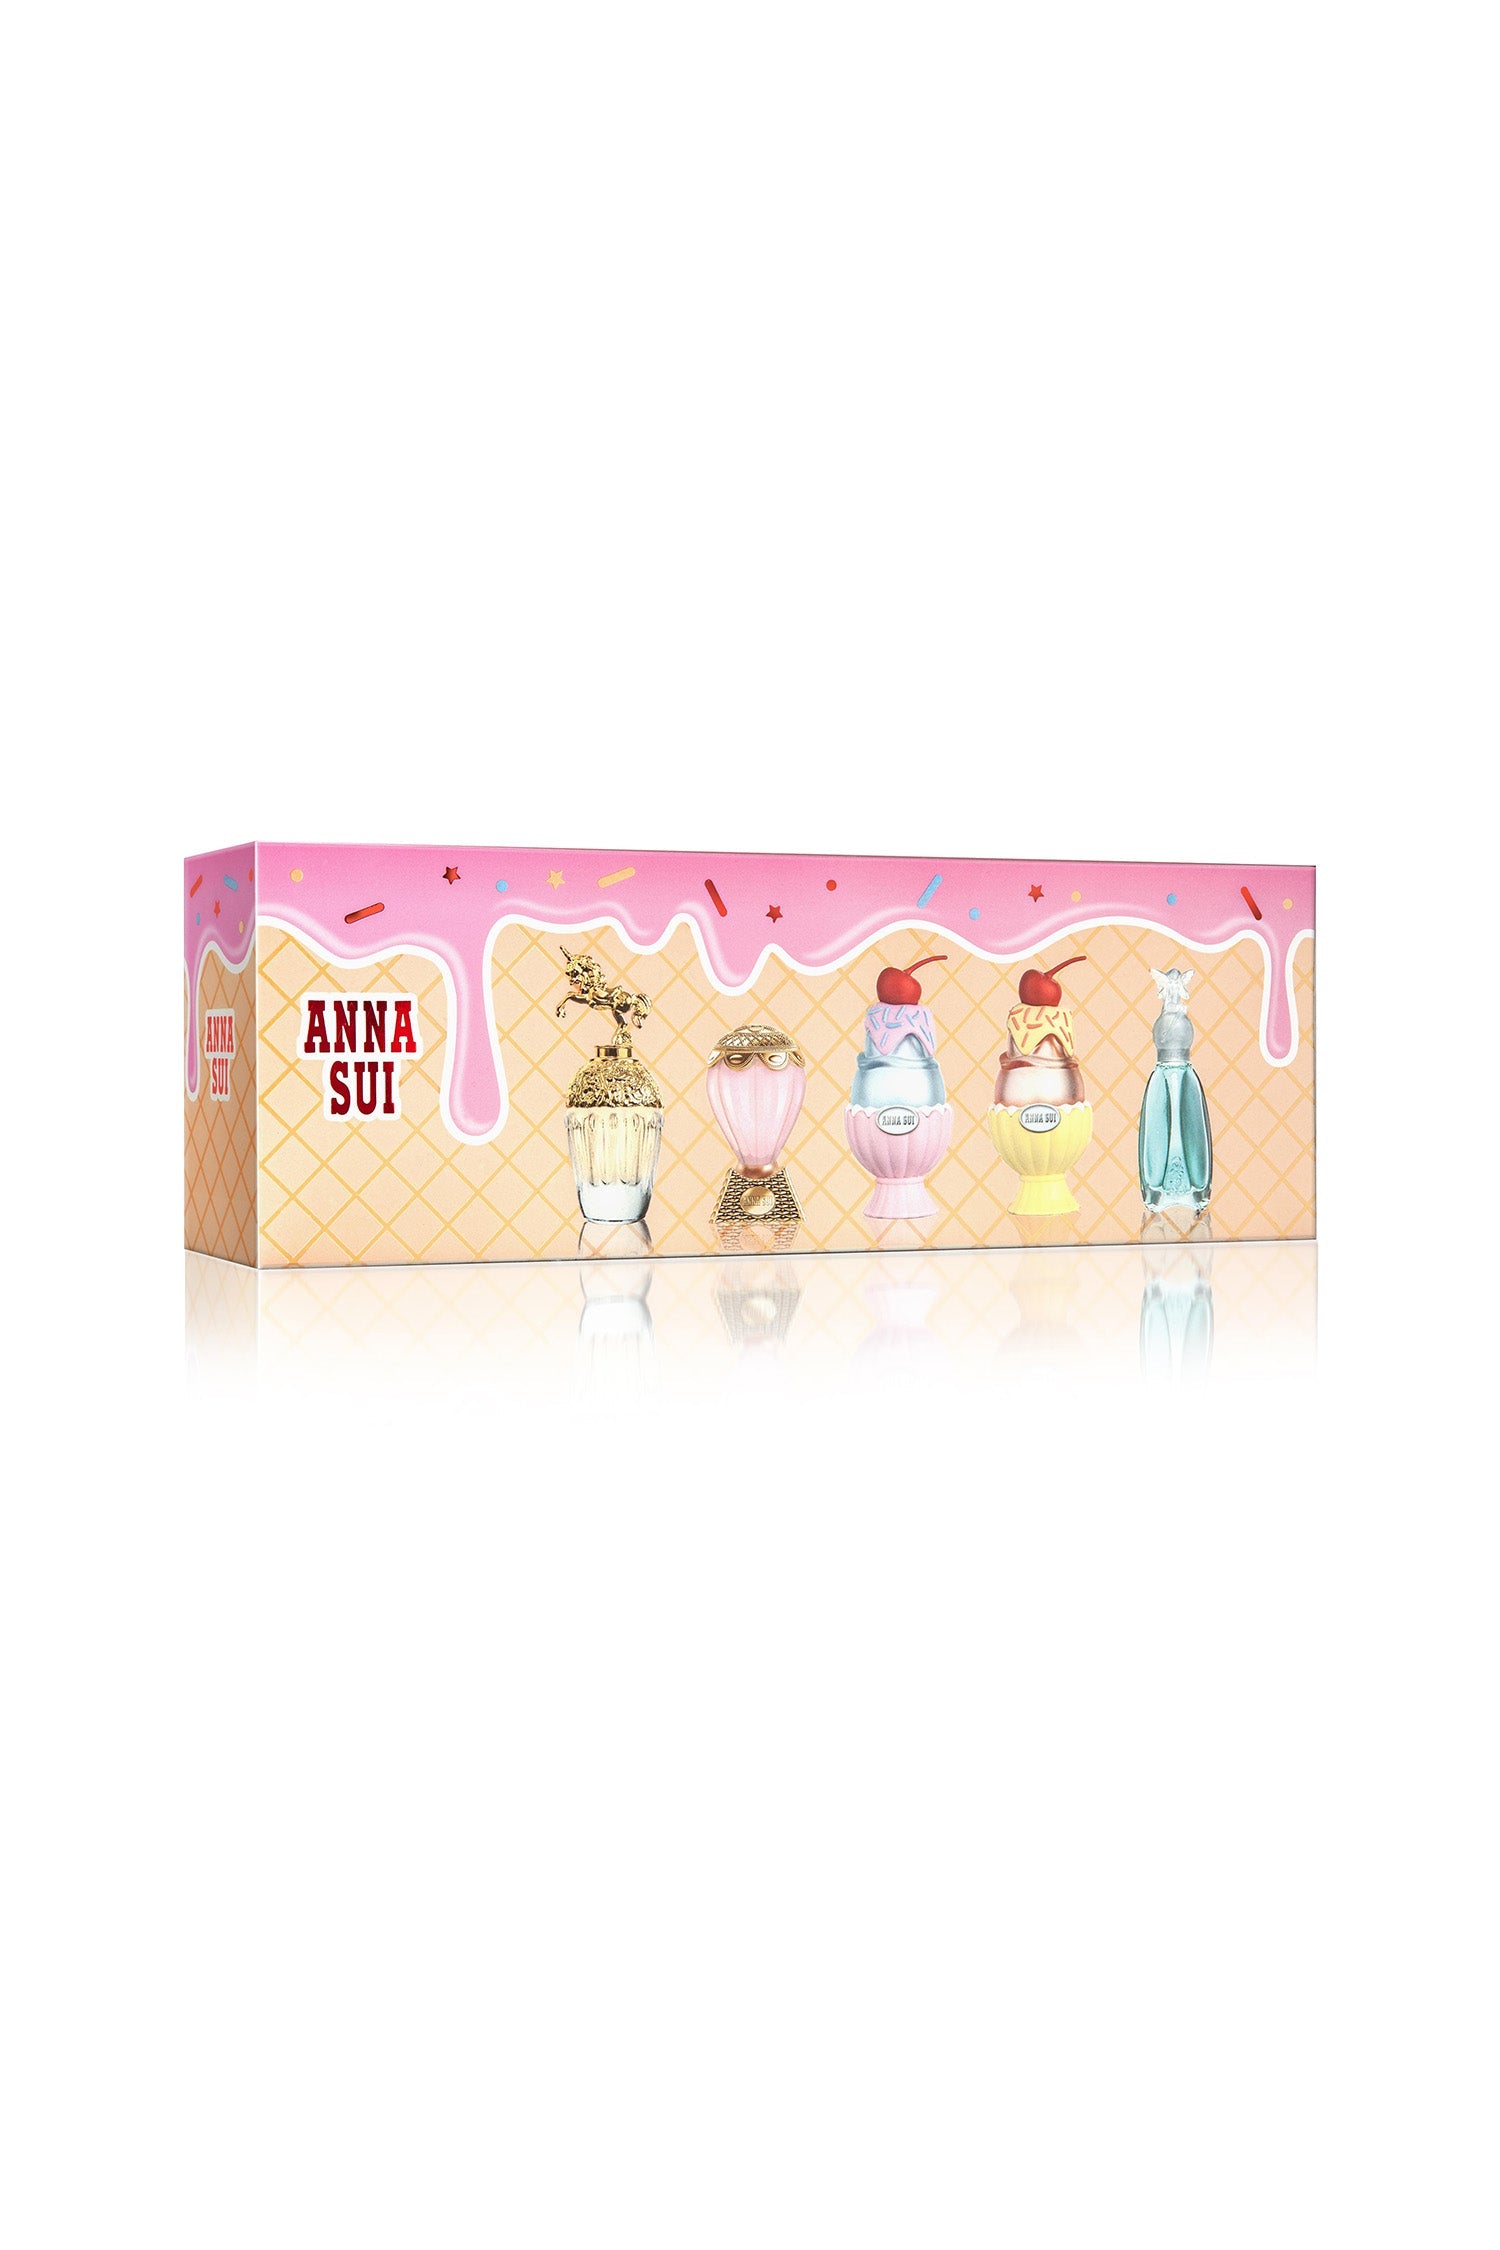 Box design for: Fantasia, Sky, Sundae Pretty Pink, Sundae Yellow Mellow, Secret Wish in miniatures of 5ml